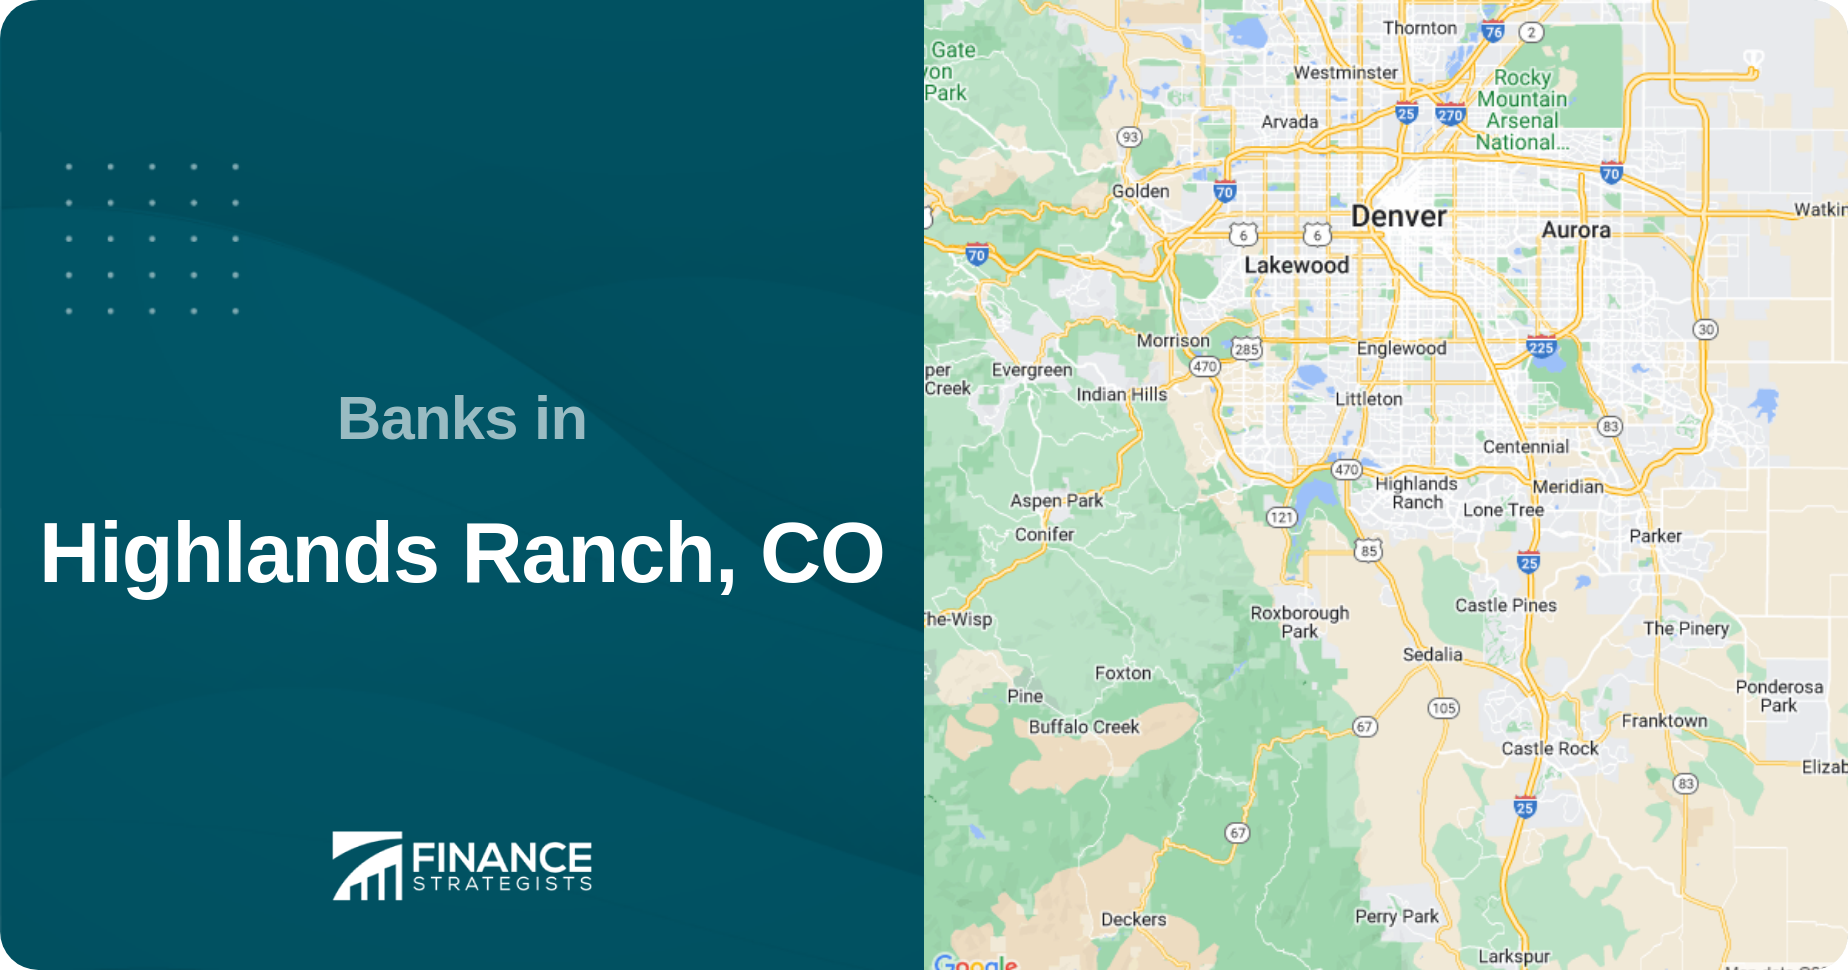 Banks in Highlands Ranch, CO